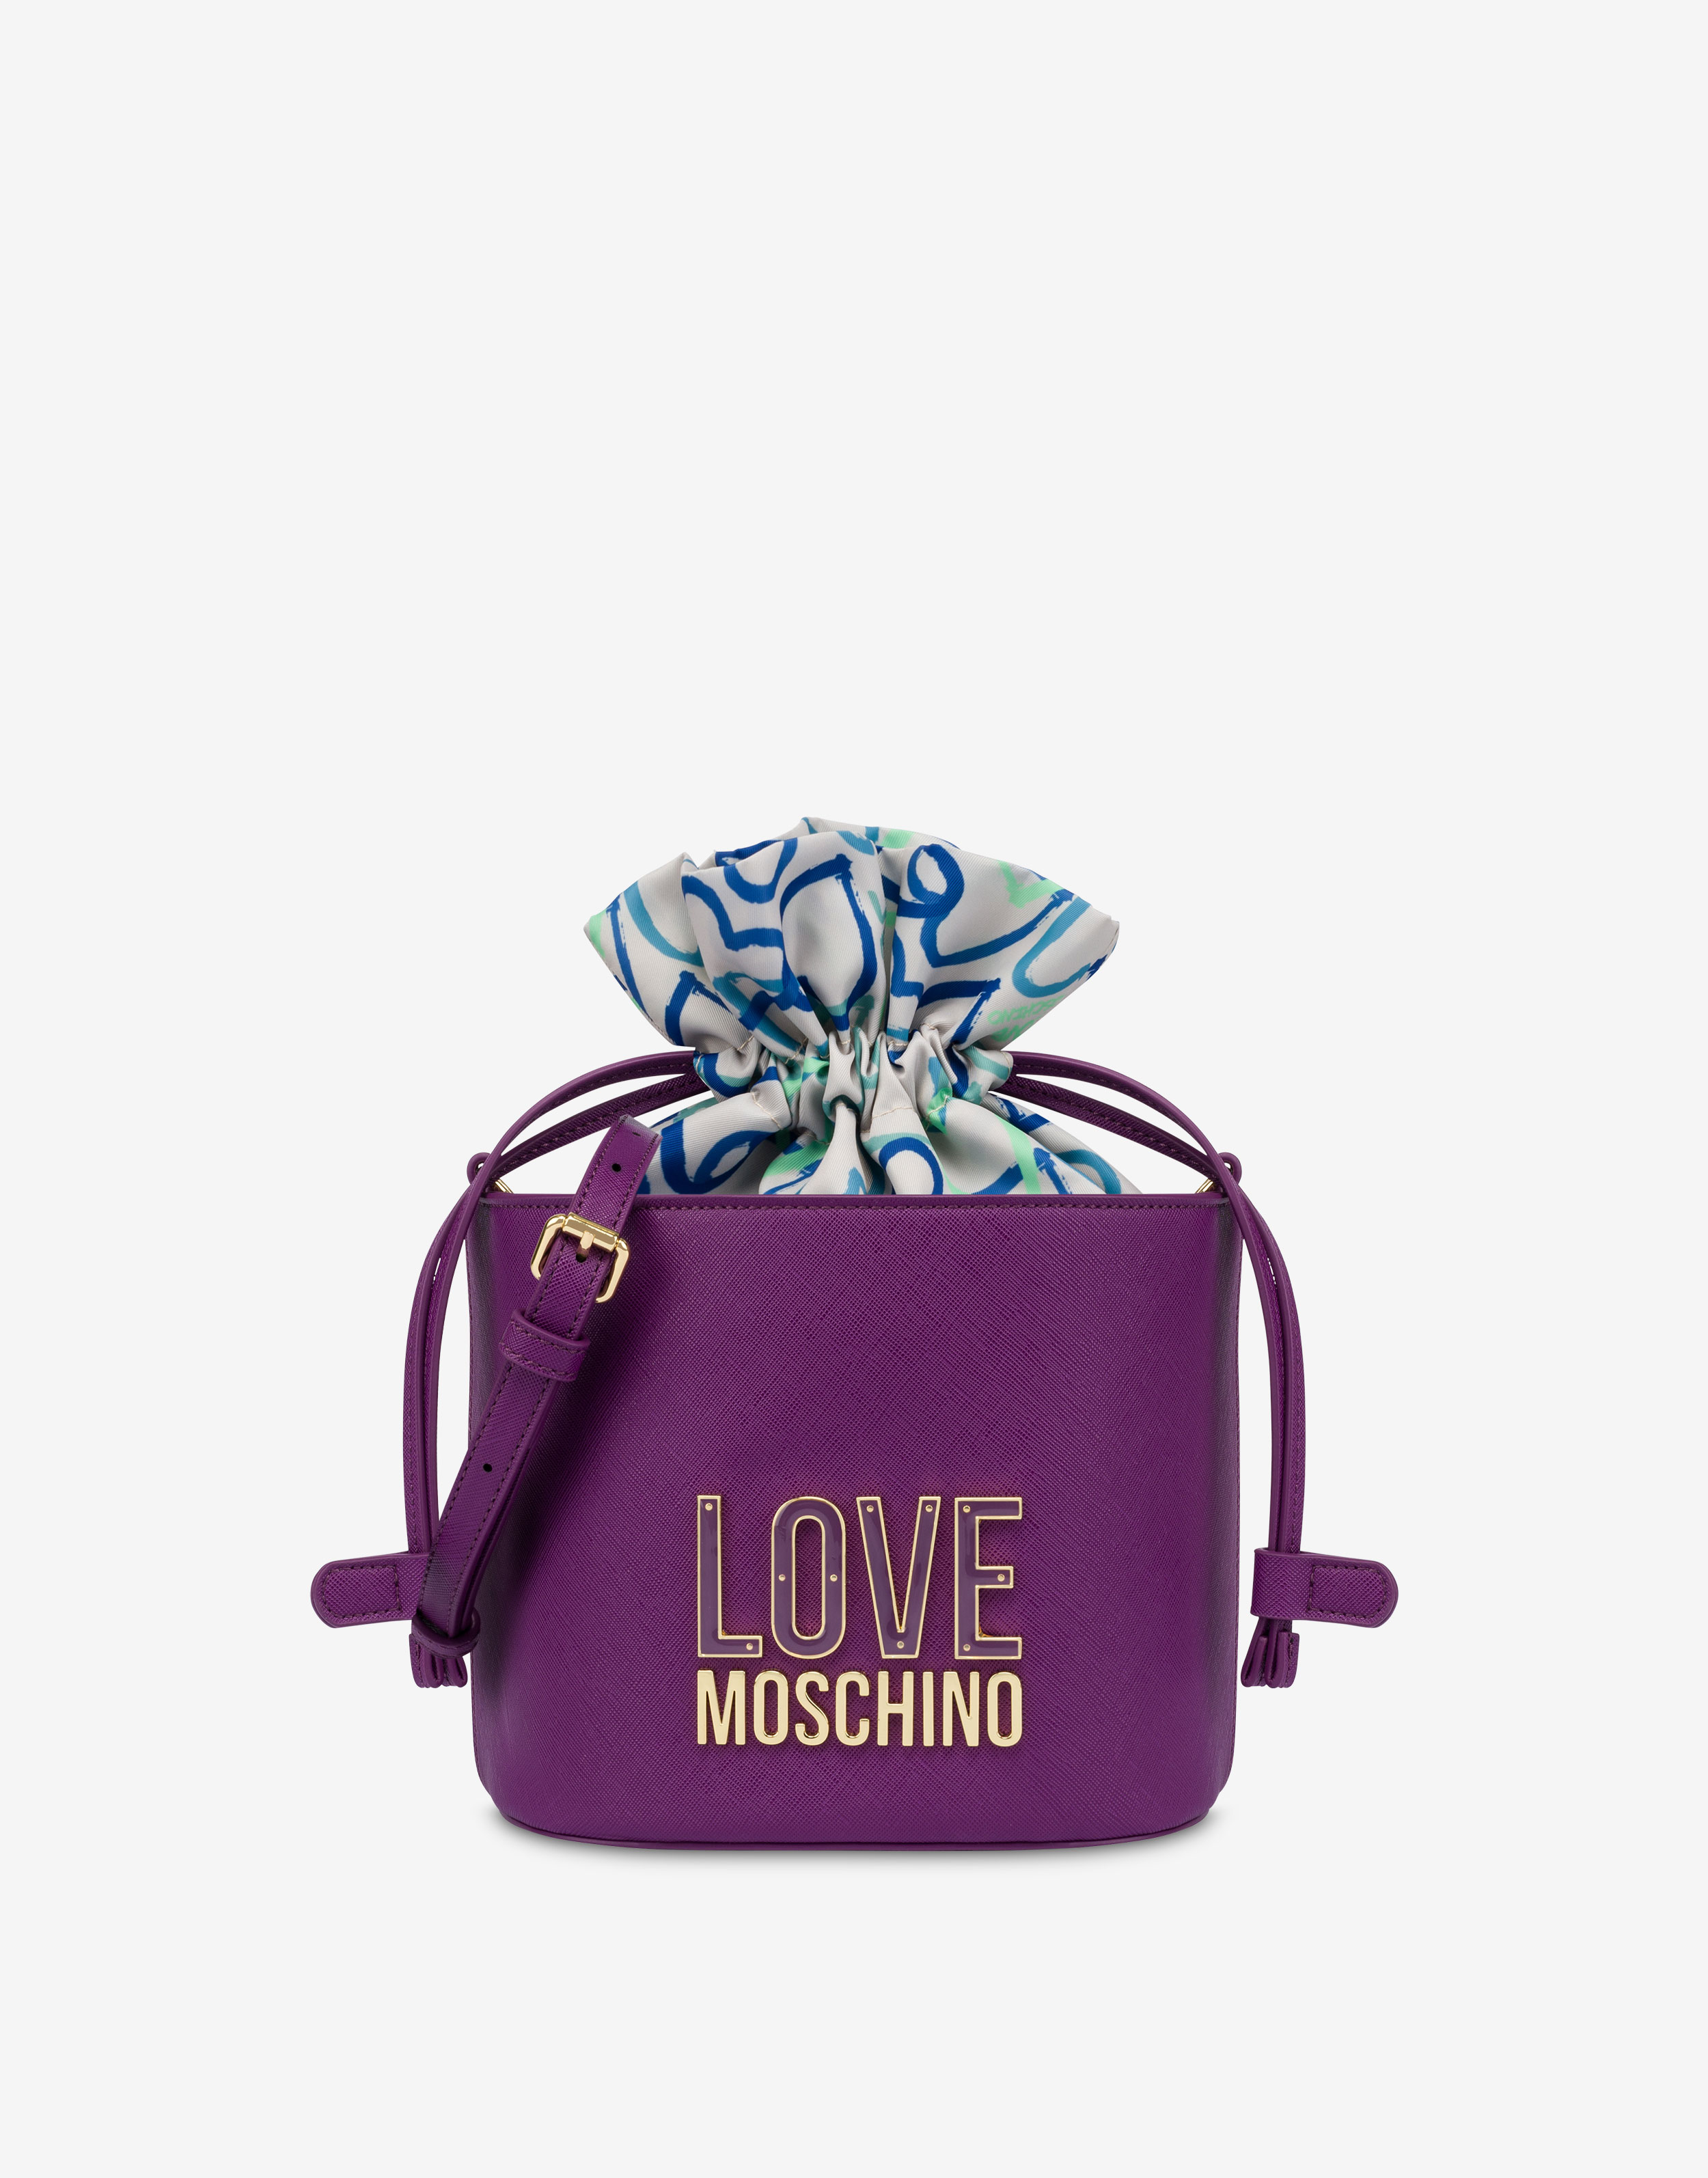 Amazon.com: Women's Clutch Handbags - Women's Clutch Handbags / Women's  Clutches & Evening H...: Clothing, Shoes & Jewelry